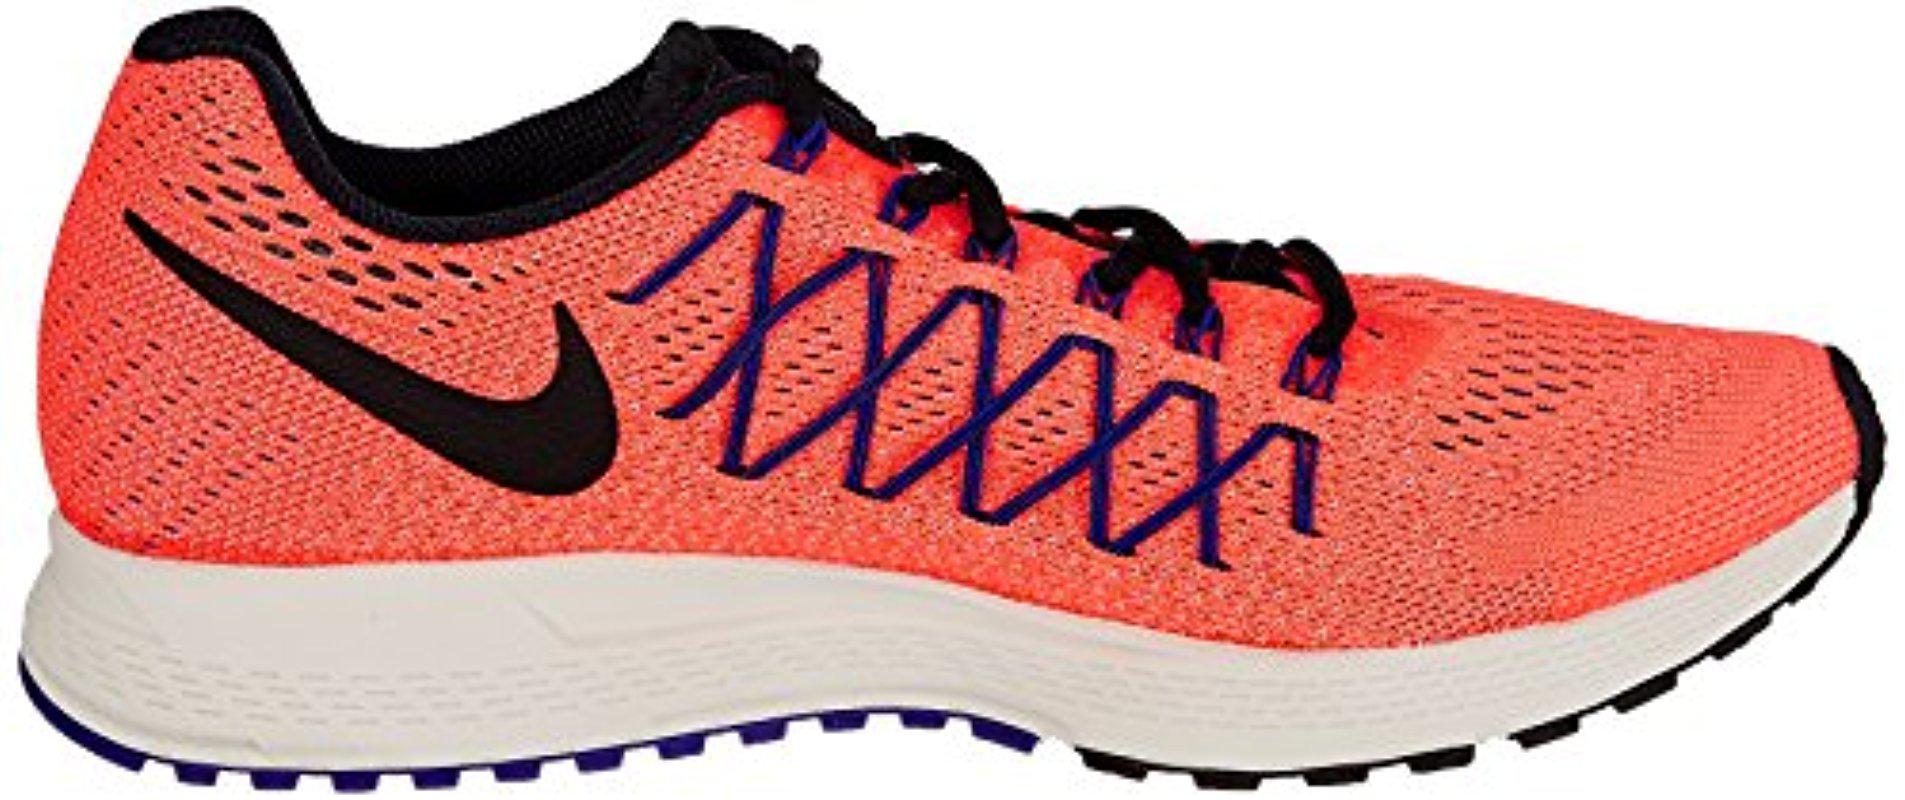 Nike Air Zoom Pegasus 32 Running Shoe in Red for Men - Lyst